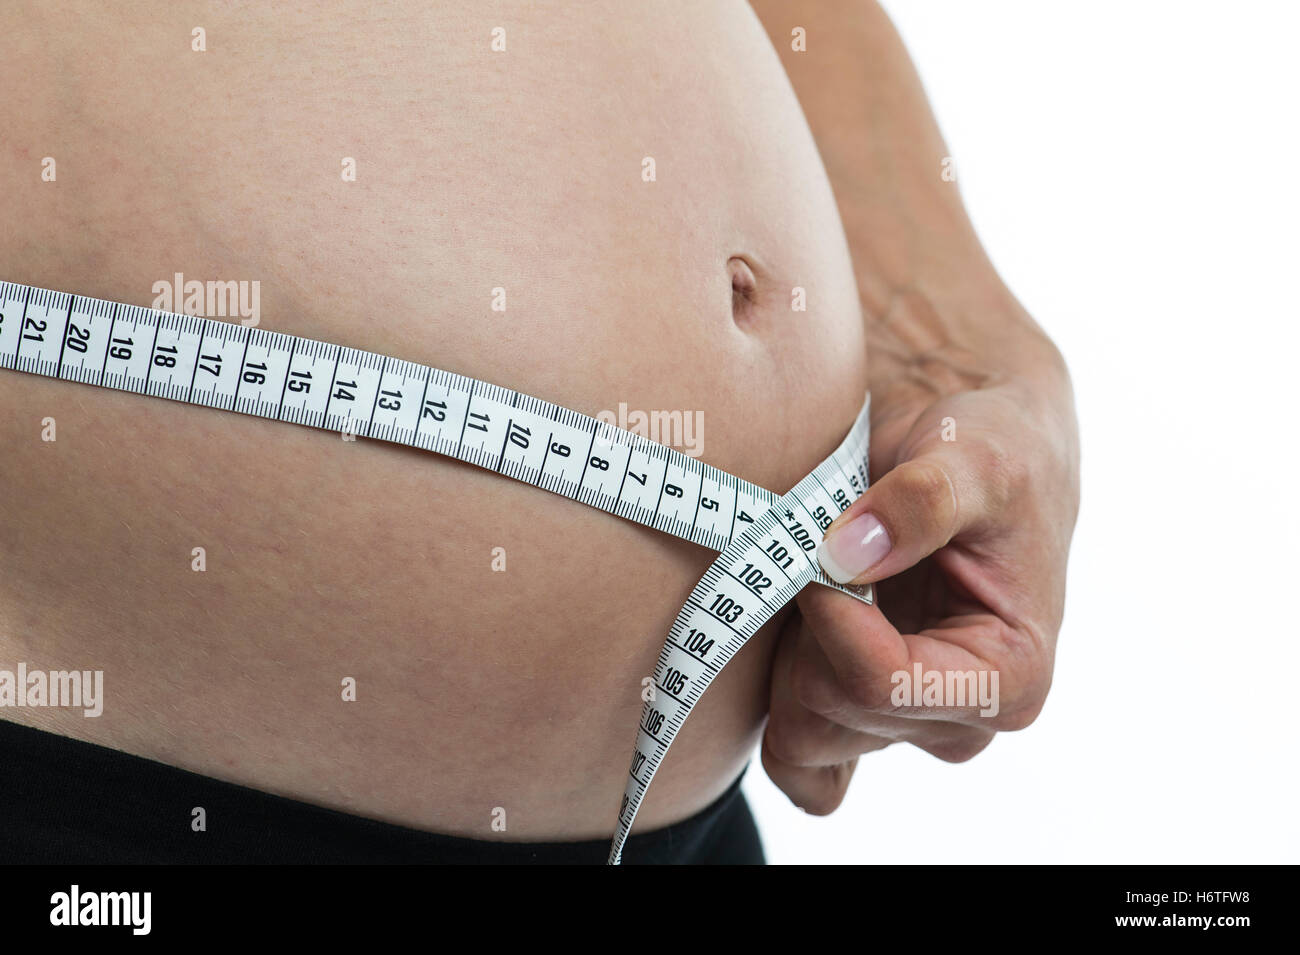 measure waist circumference Stock Photo